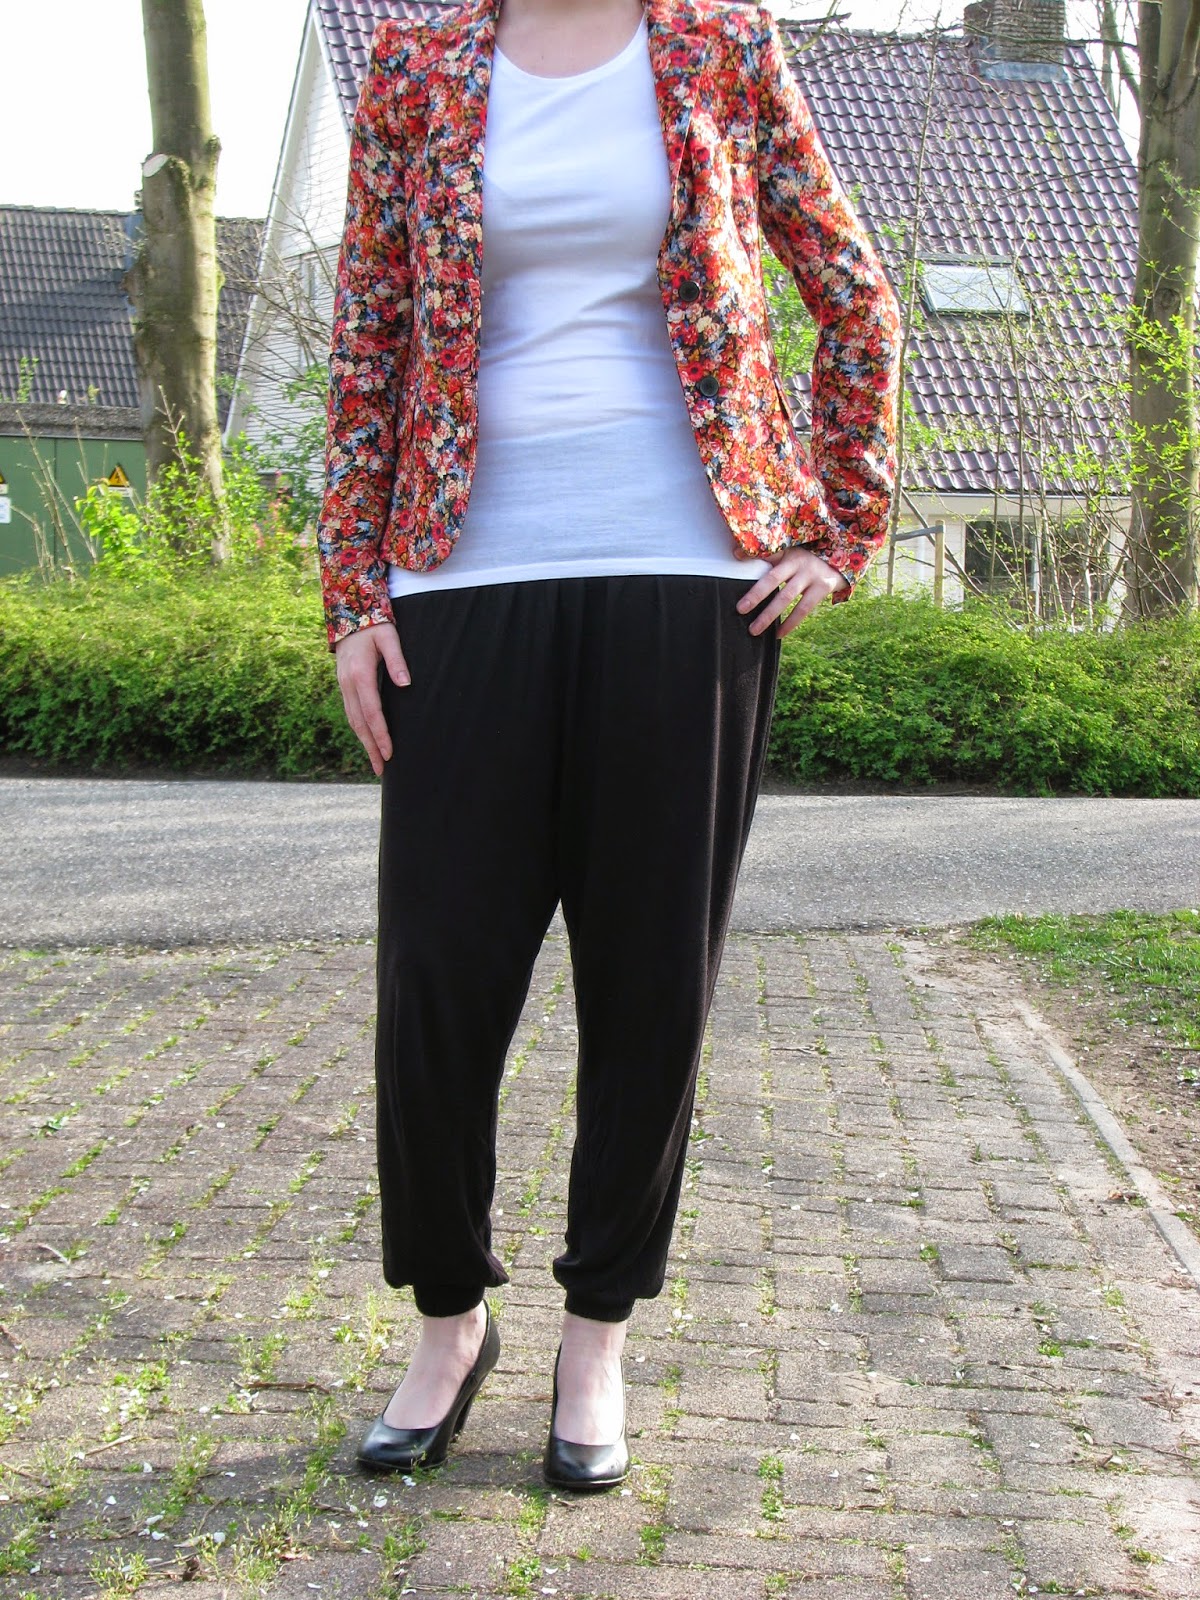 http://hmlovur.blogspot.nl/2014/04/outfits-of-week-week-14.html